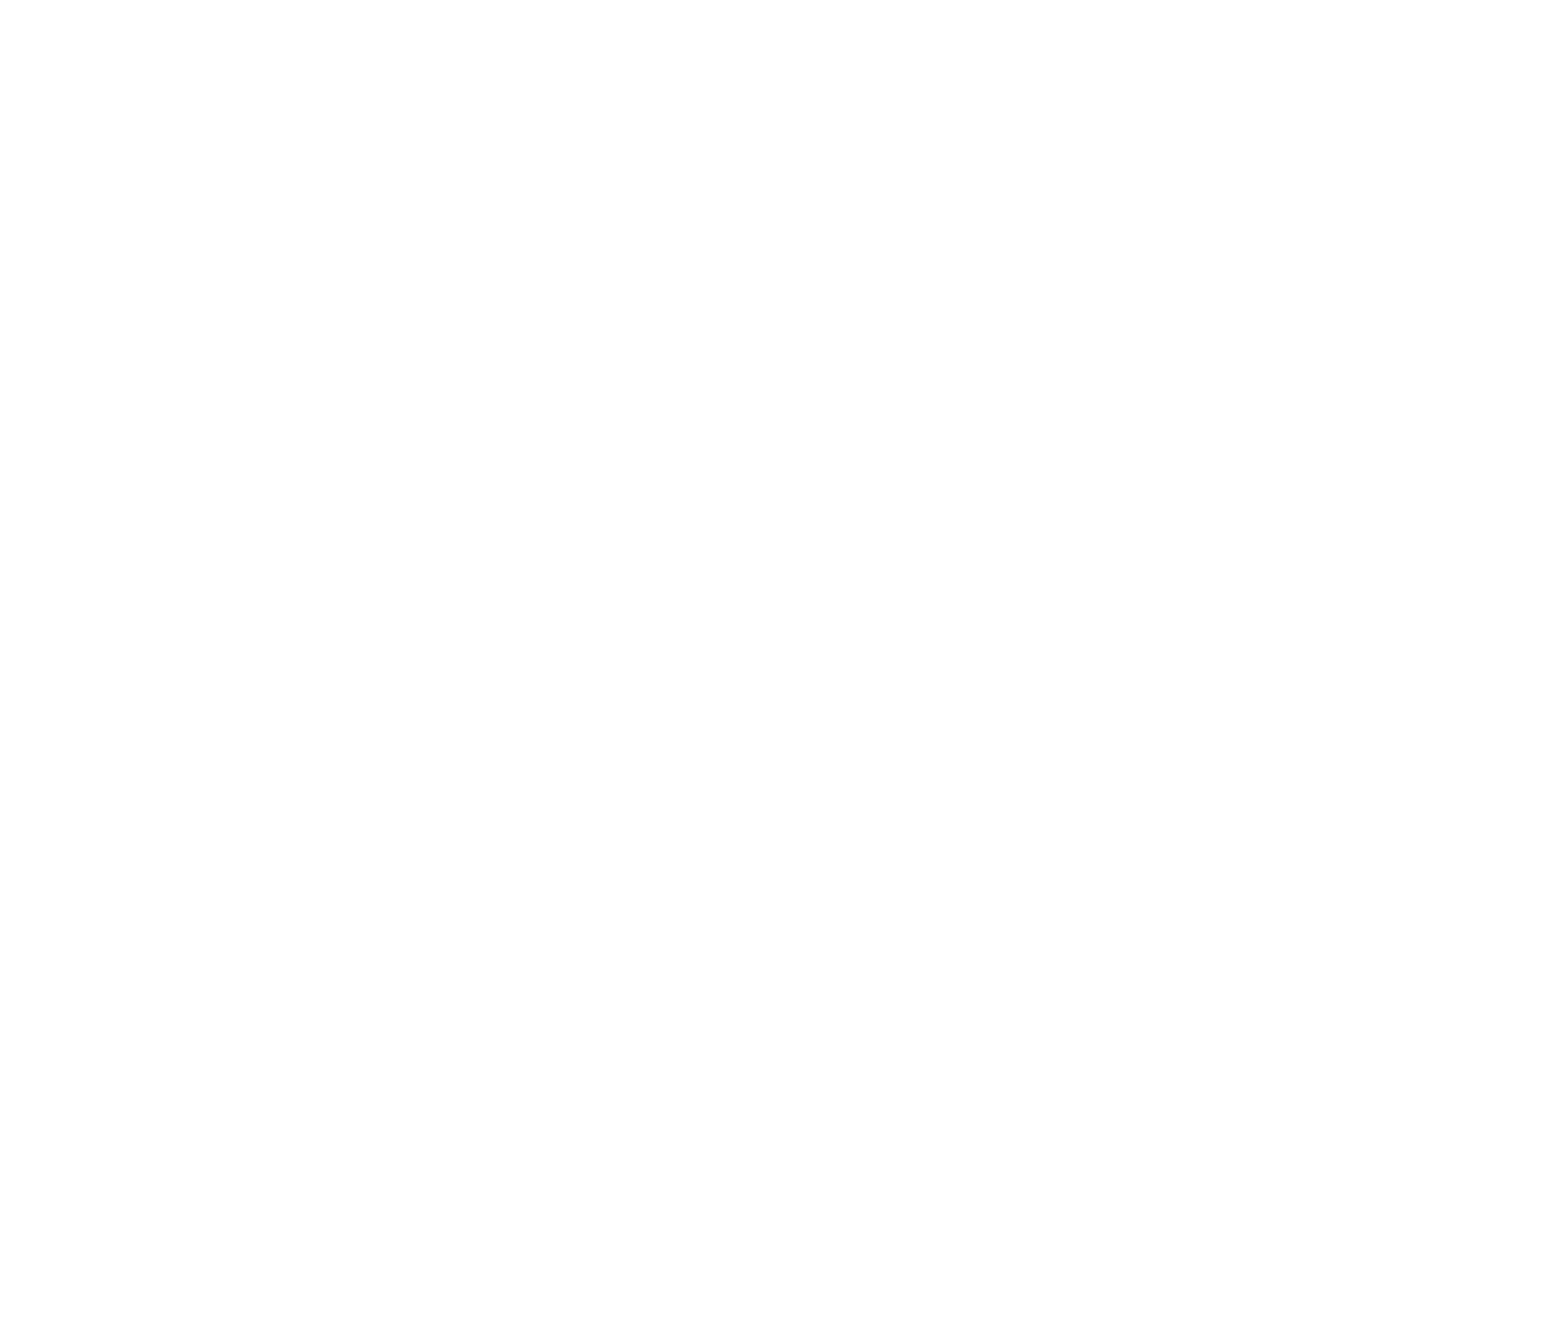 Galenica logo for dark backgrounds (transparent PNG)